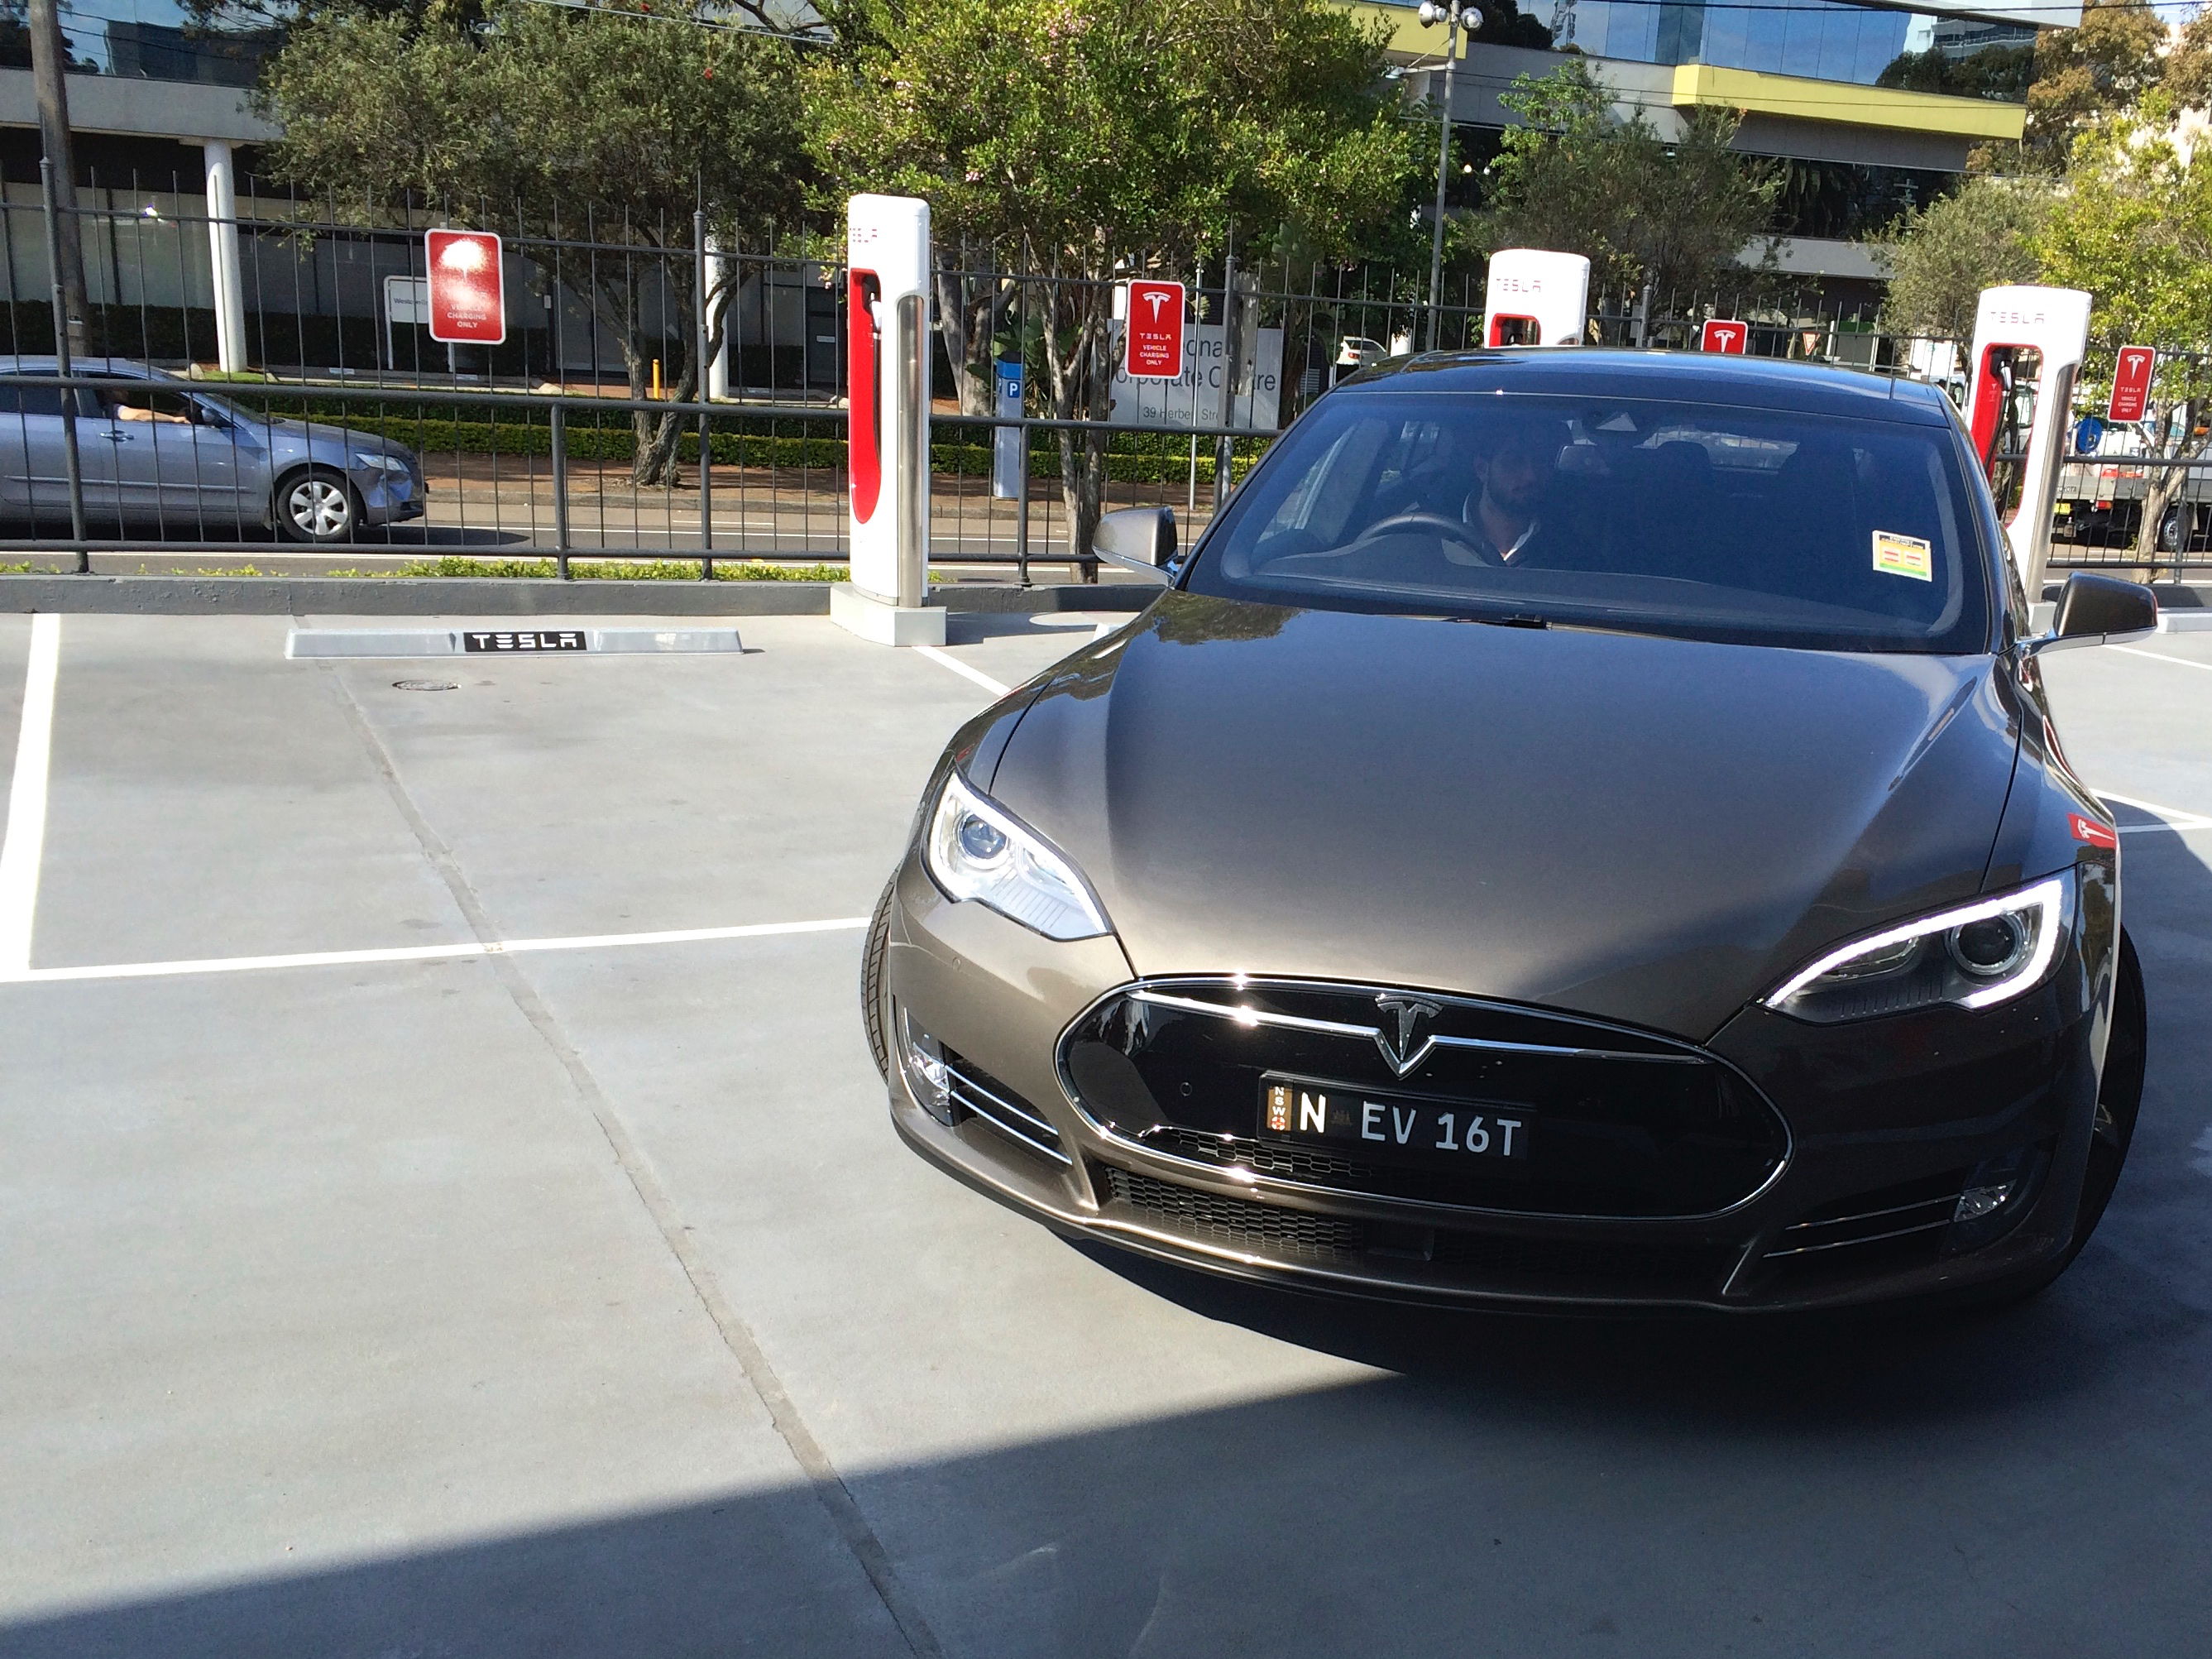 Tesla Model S first drive